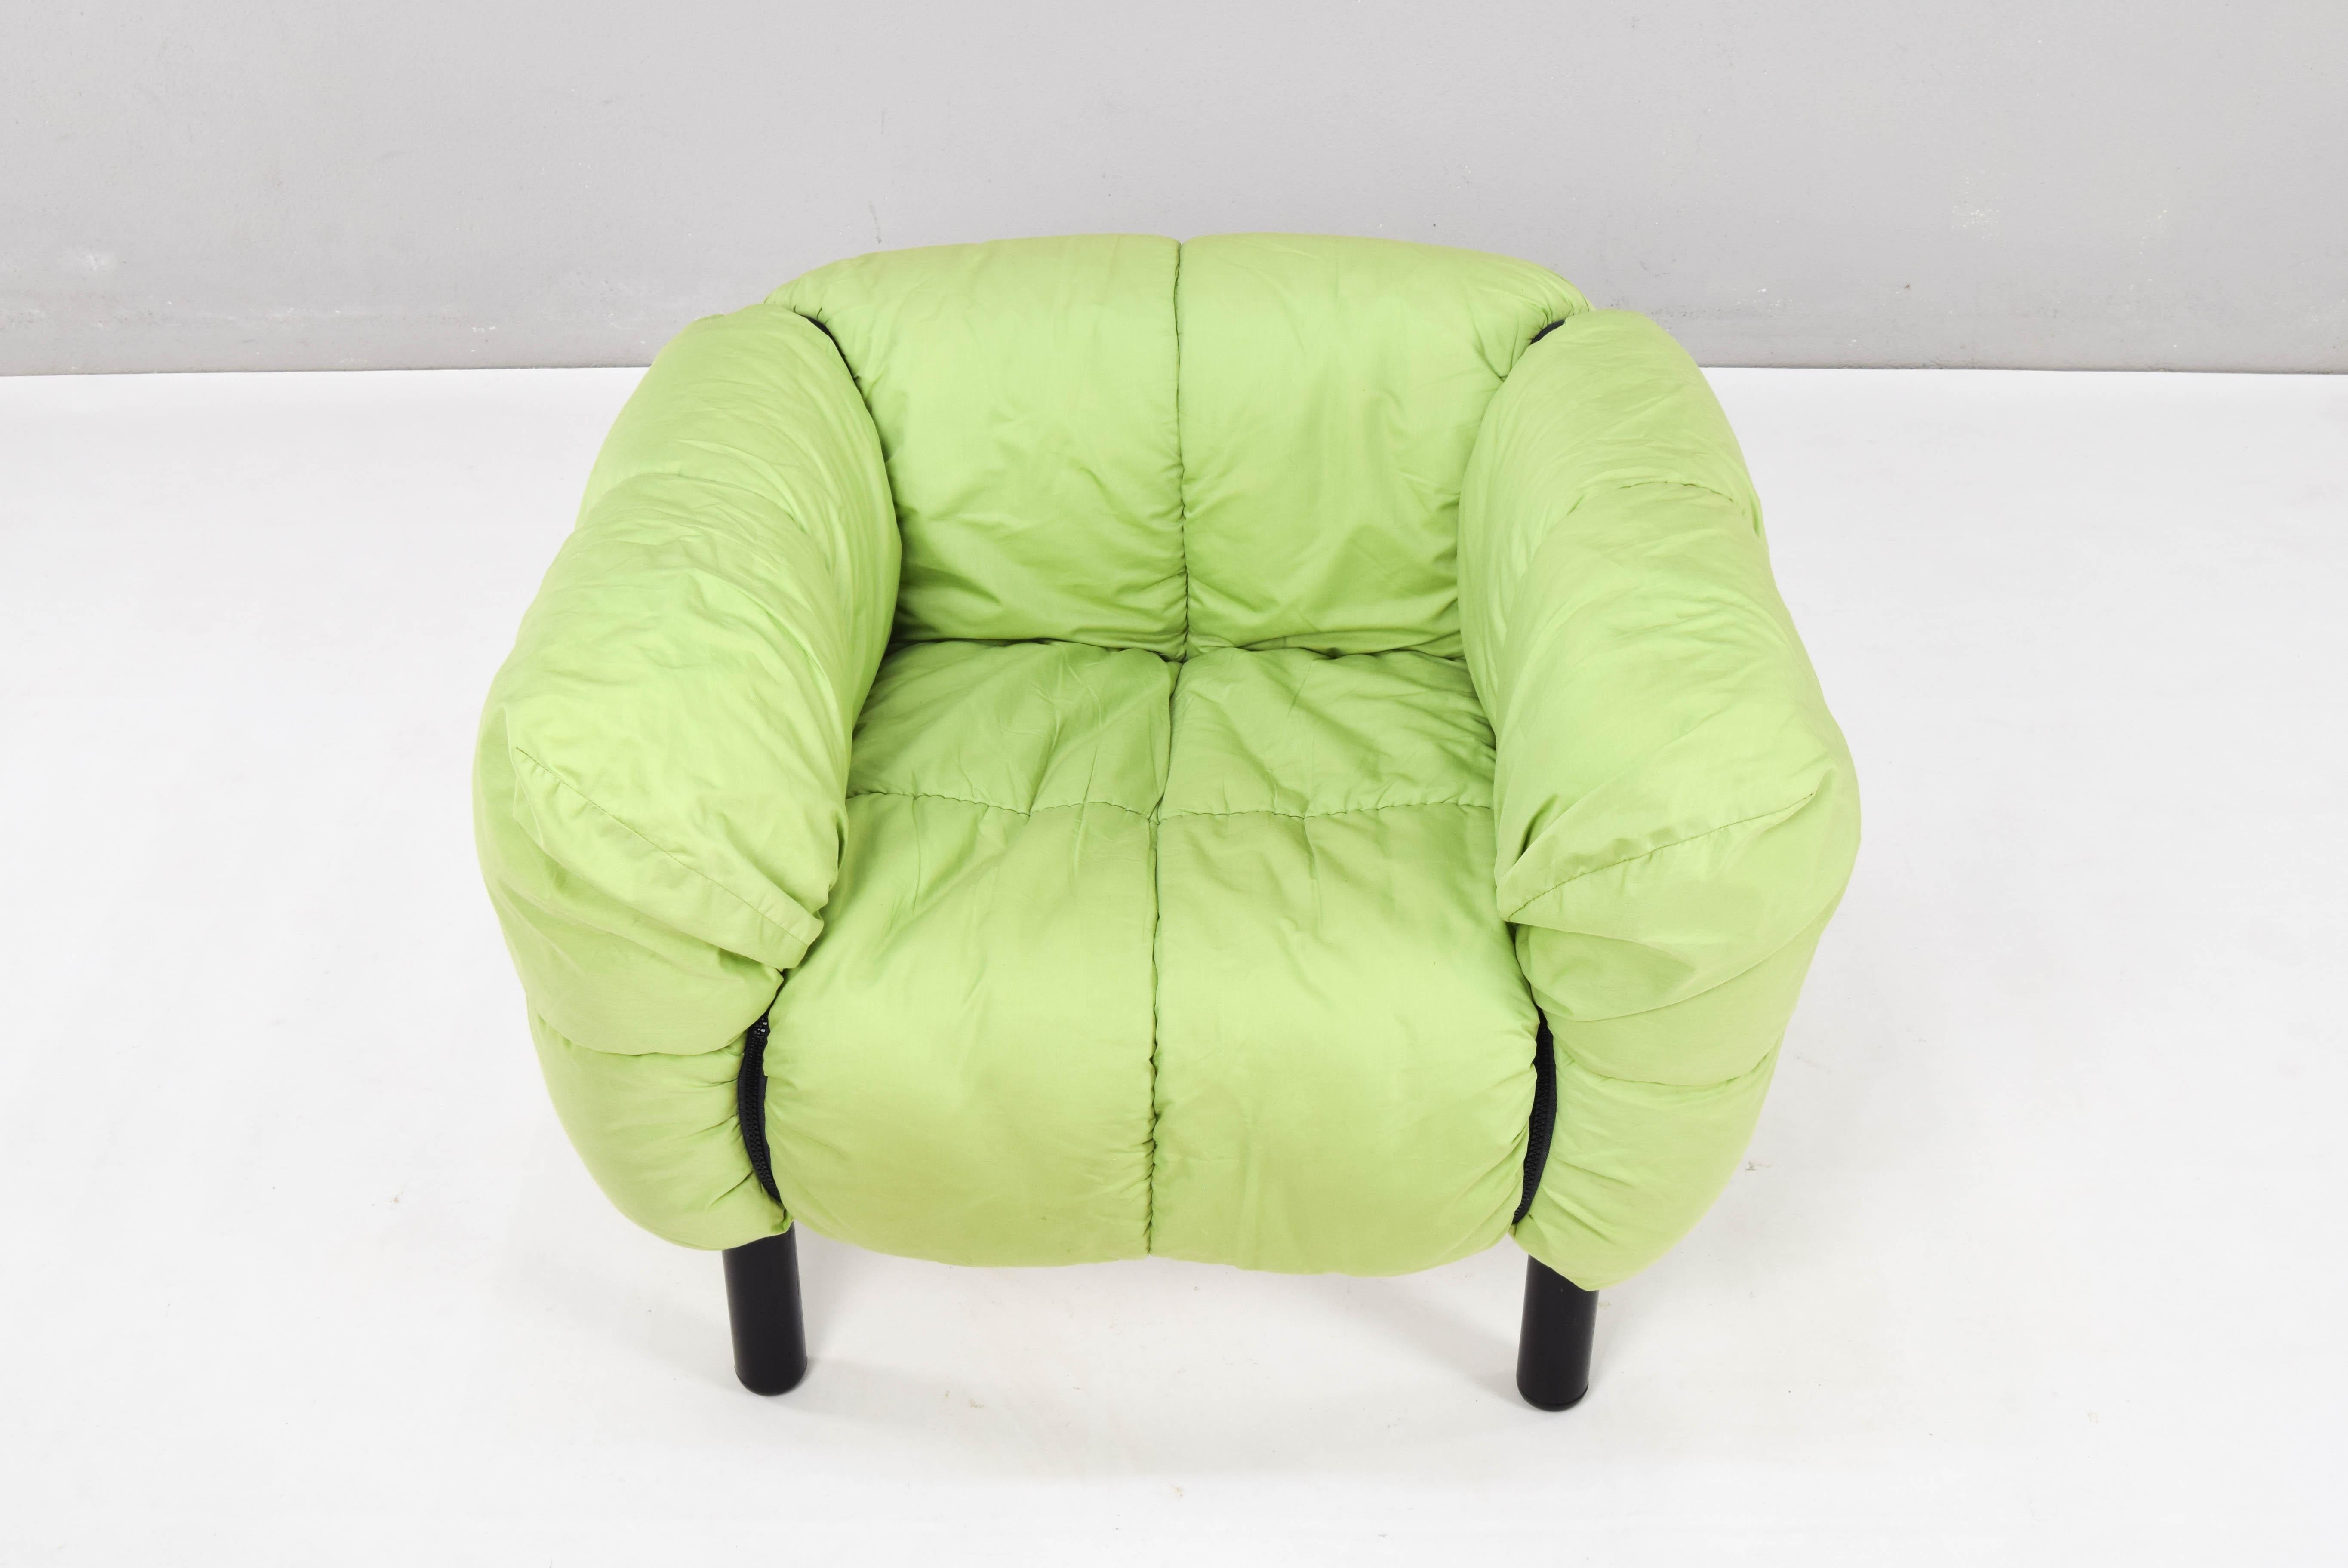 Pecorelle Strips Mid-Century Modern Chair by Cini Boeri to Arflex 7